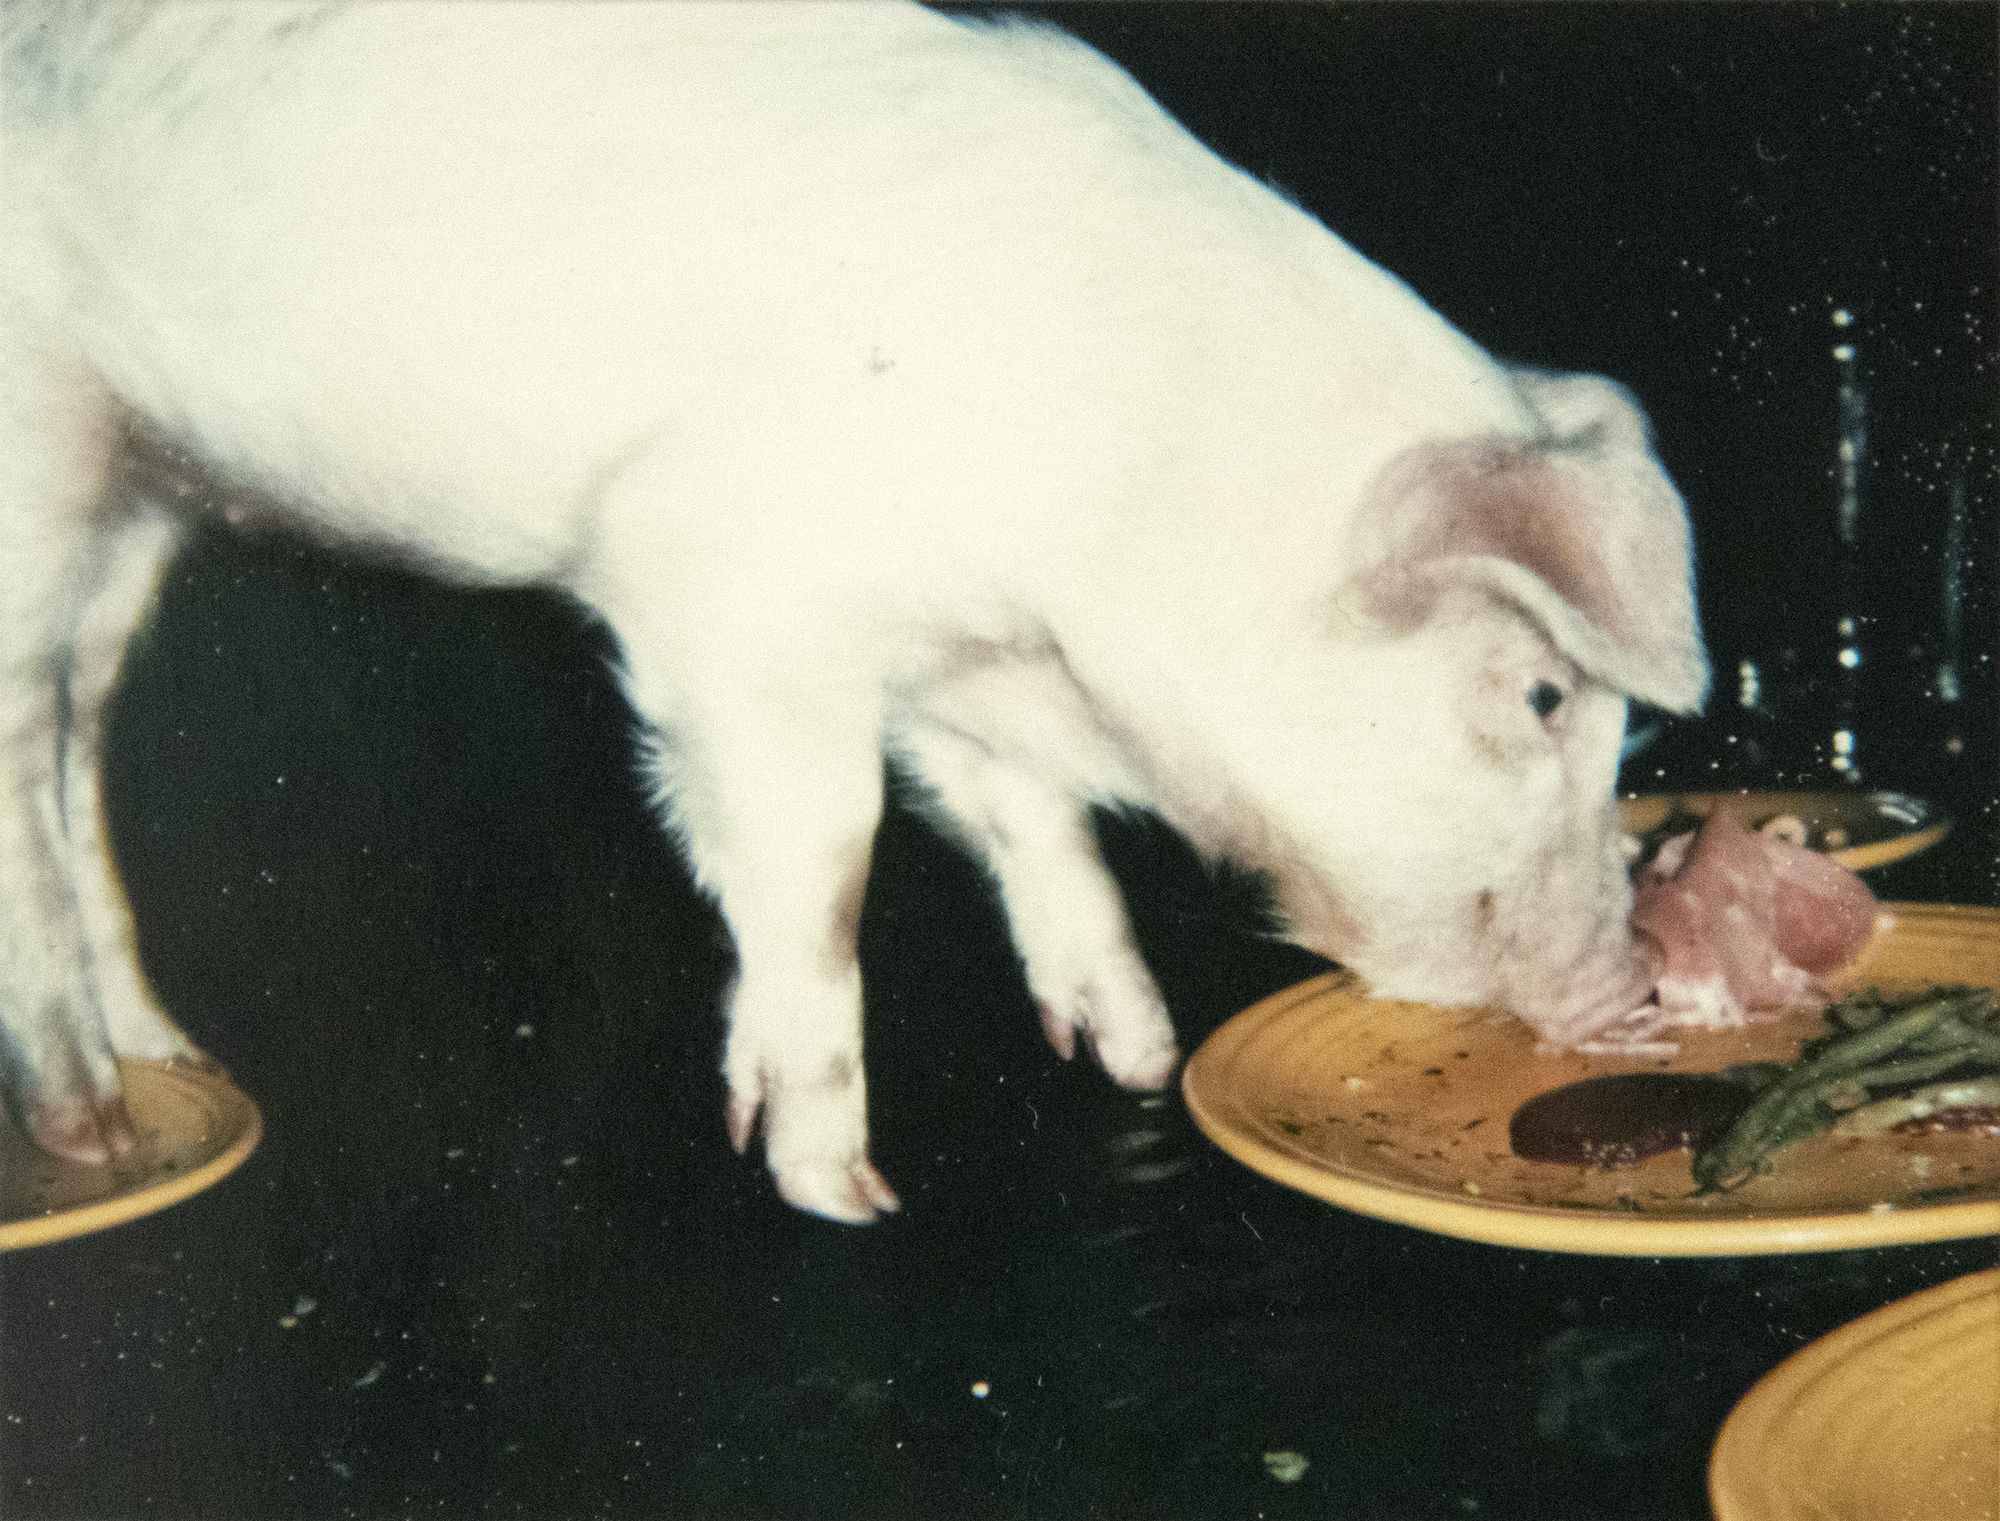 ANDY WARHOL - Fiesta Pigs - Polaroid, Polacolor - 4 1/4 x 3 3/8 in. ea.